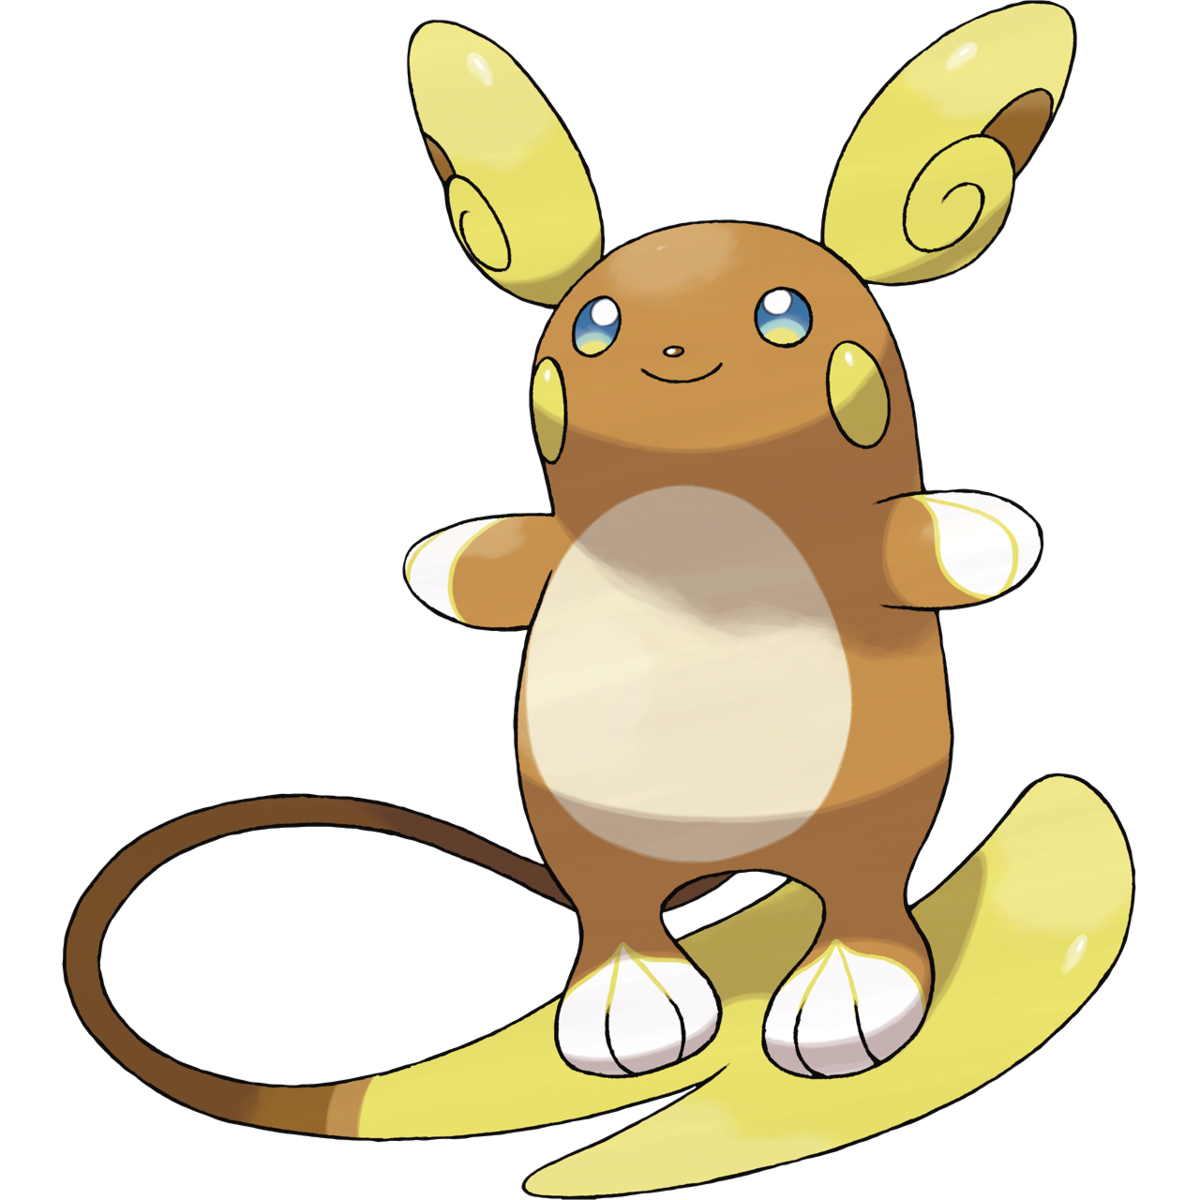 Marowak - Forma de Alola (Pokémon) - Pokémon GO